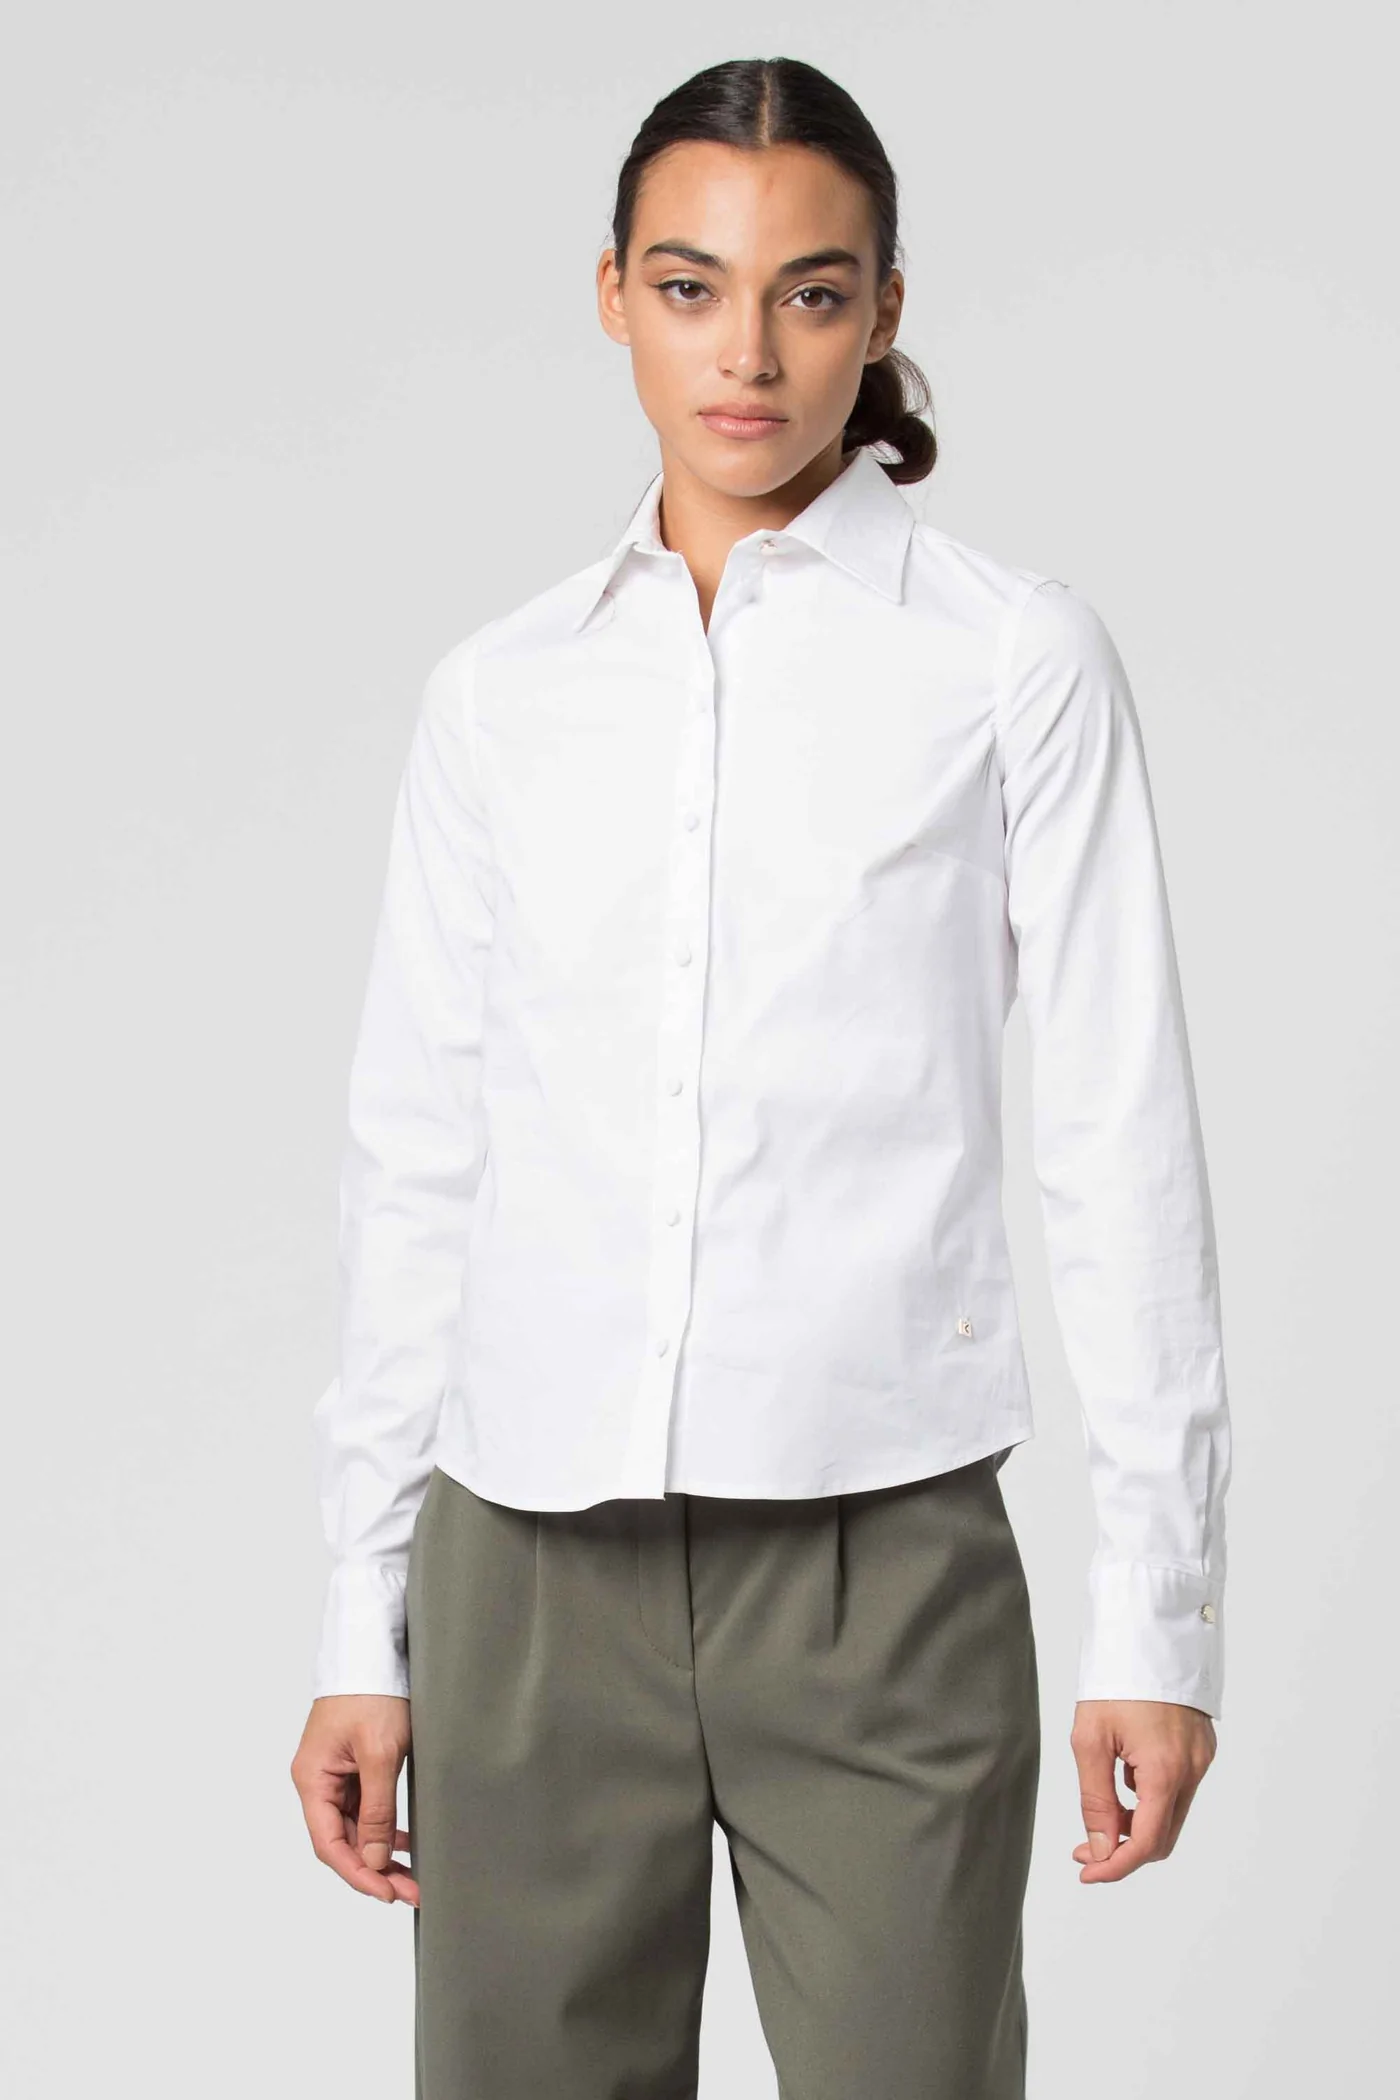 KOCCA camisa color blanco - 1